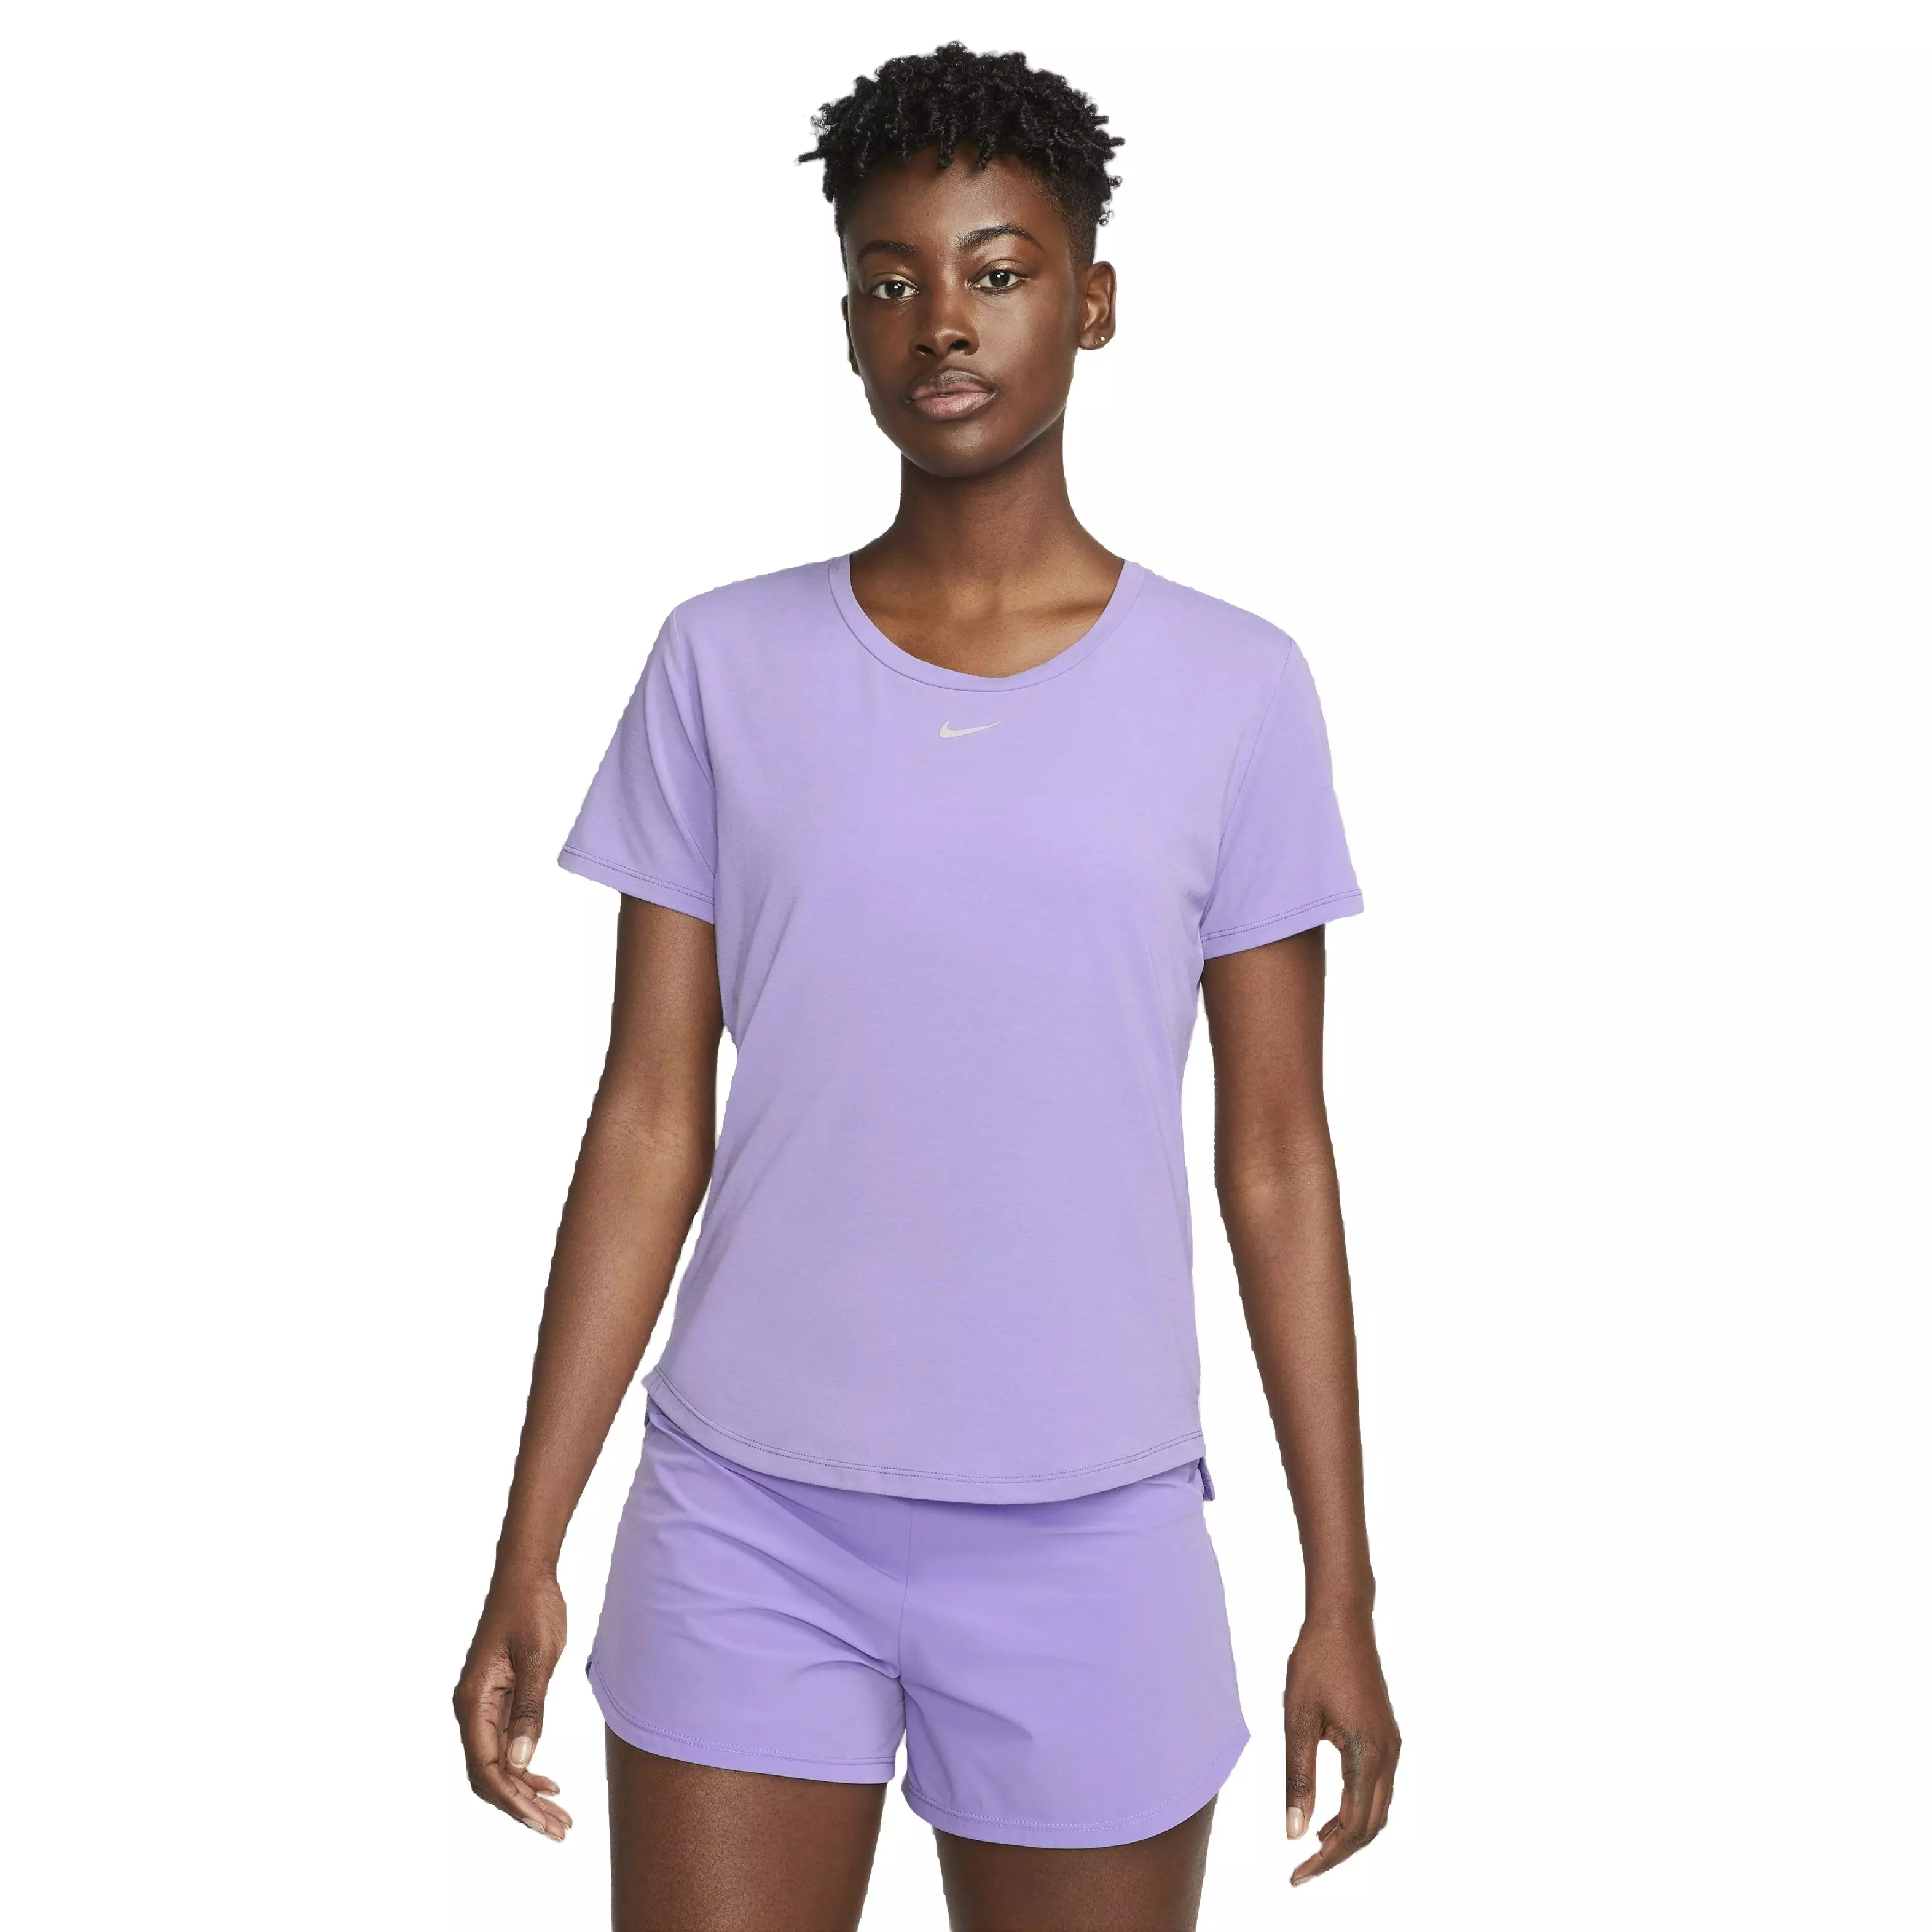 Luxe Purple Shorts